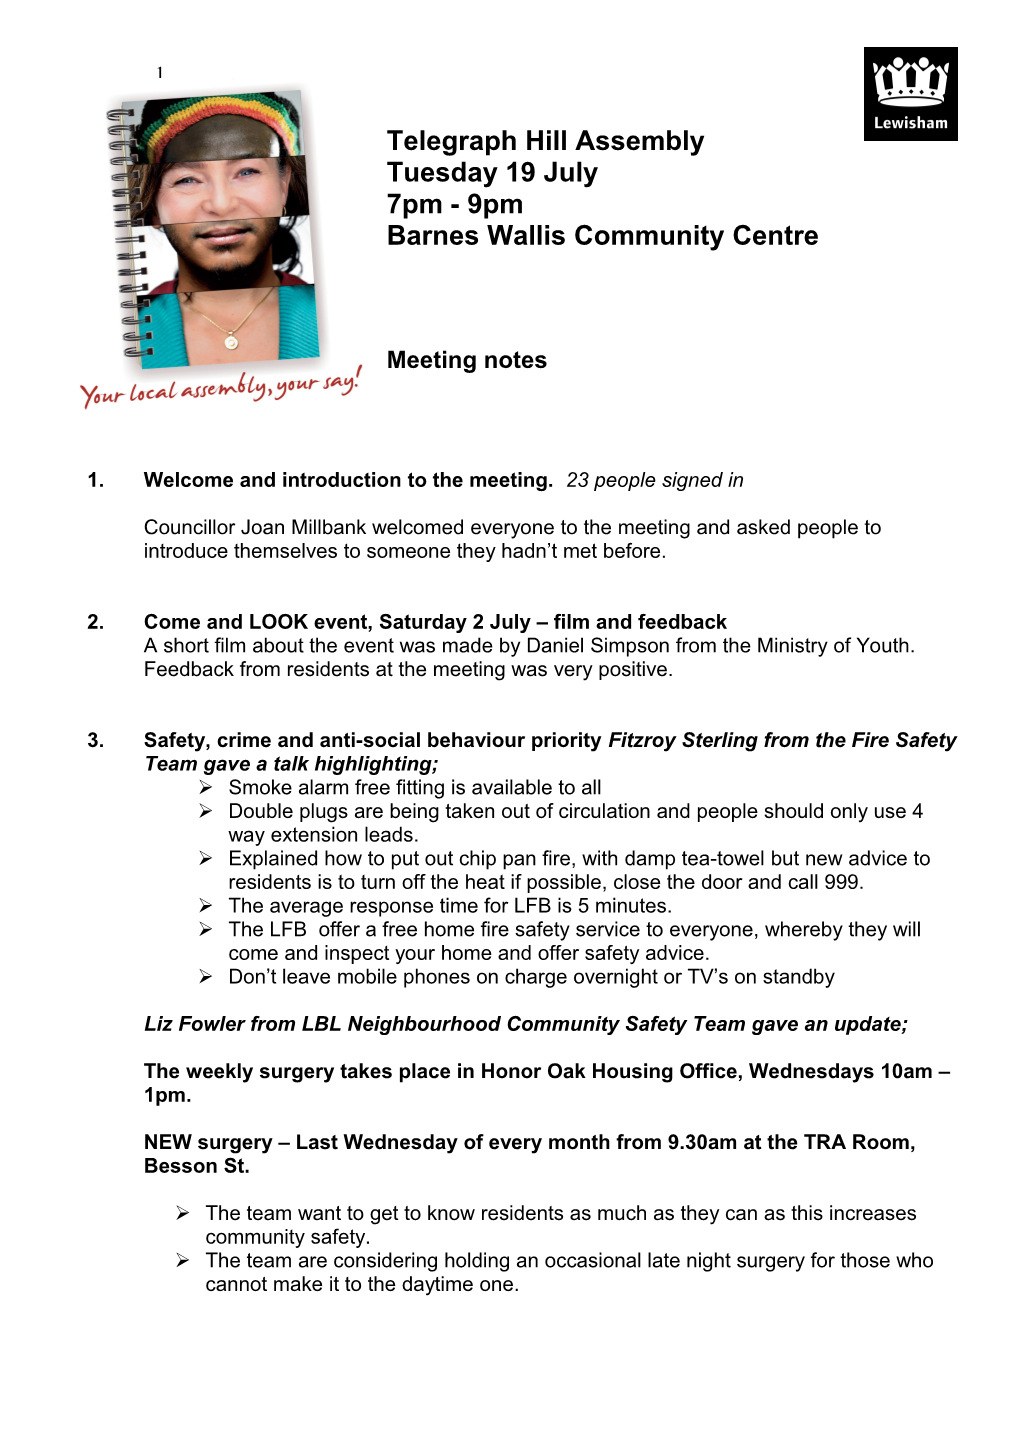 Barnes Wallis Community Centre